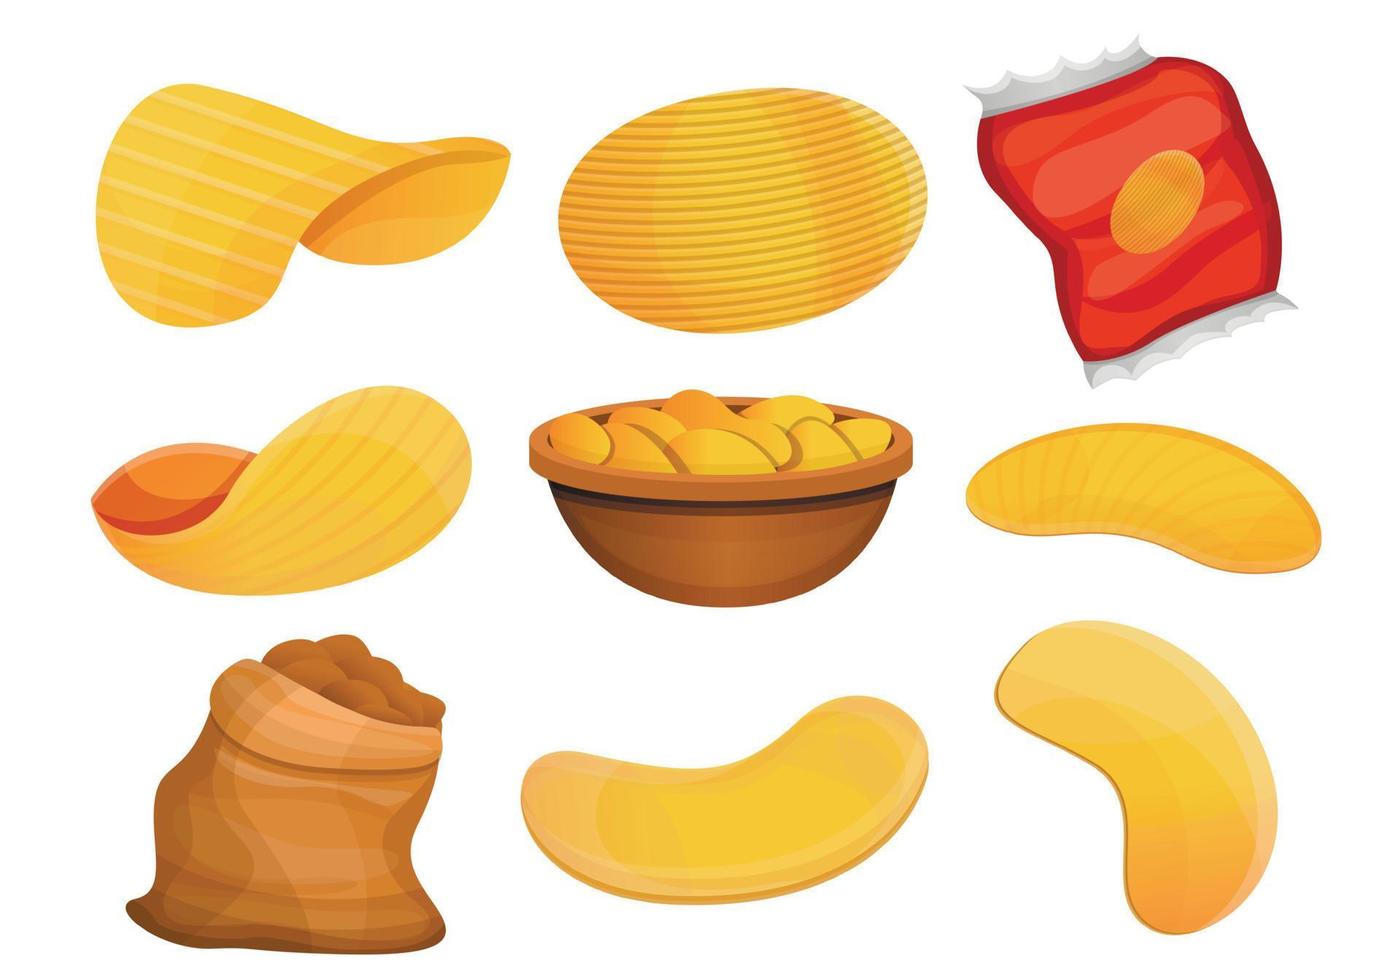 Chips potato icon set, cartoon style vector